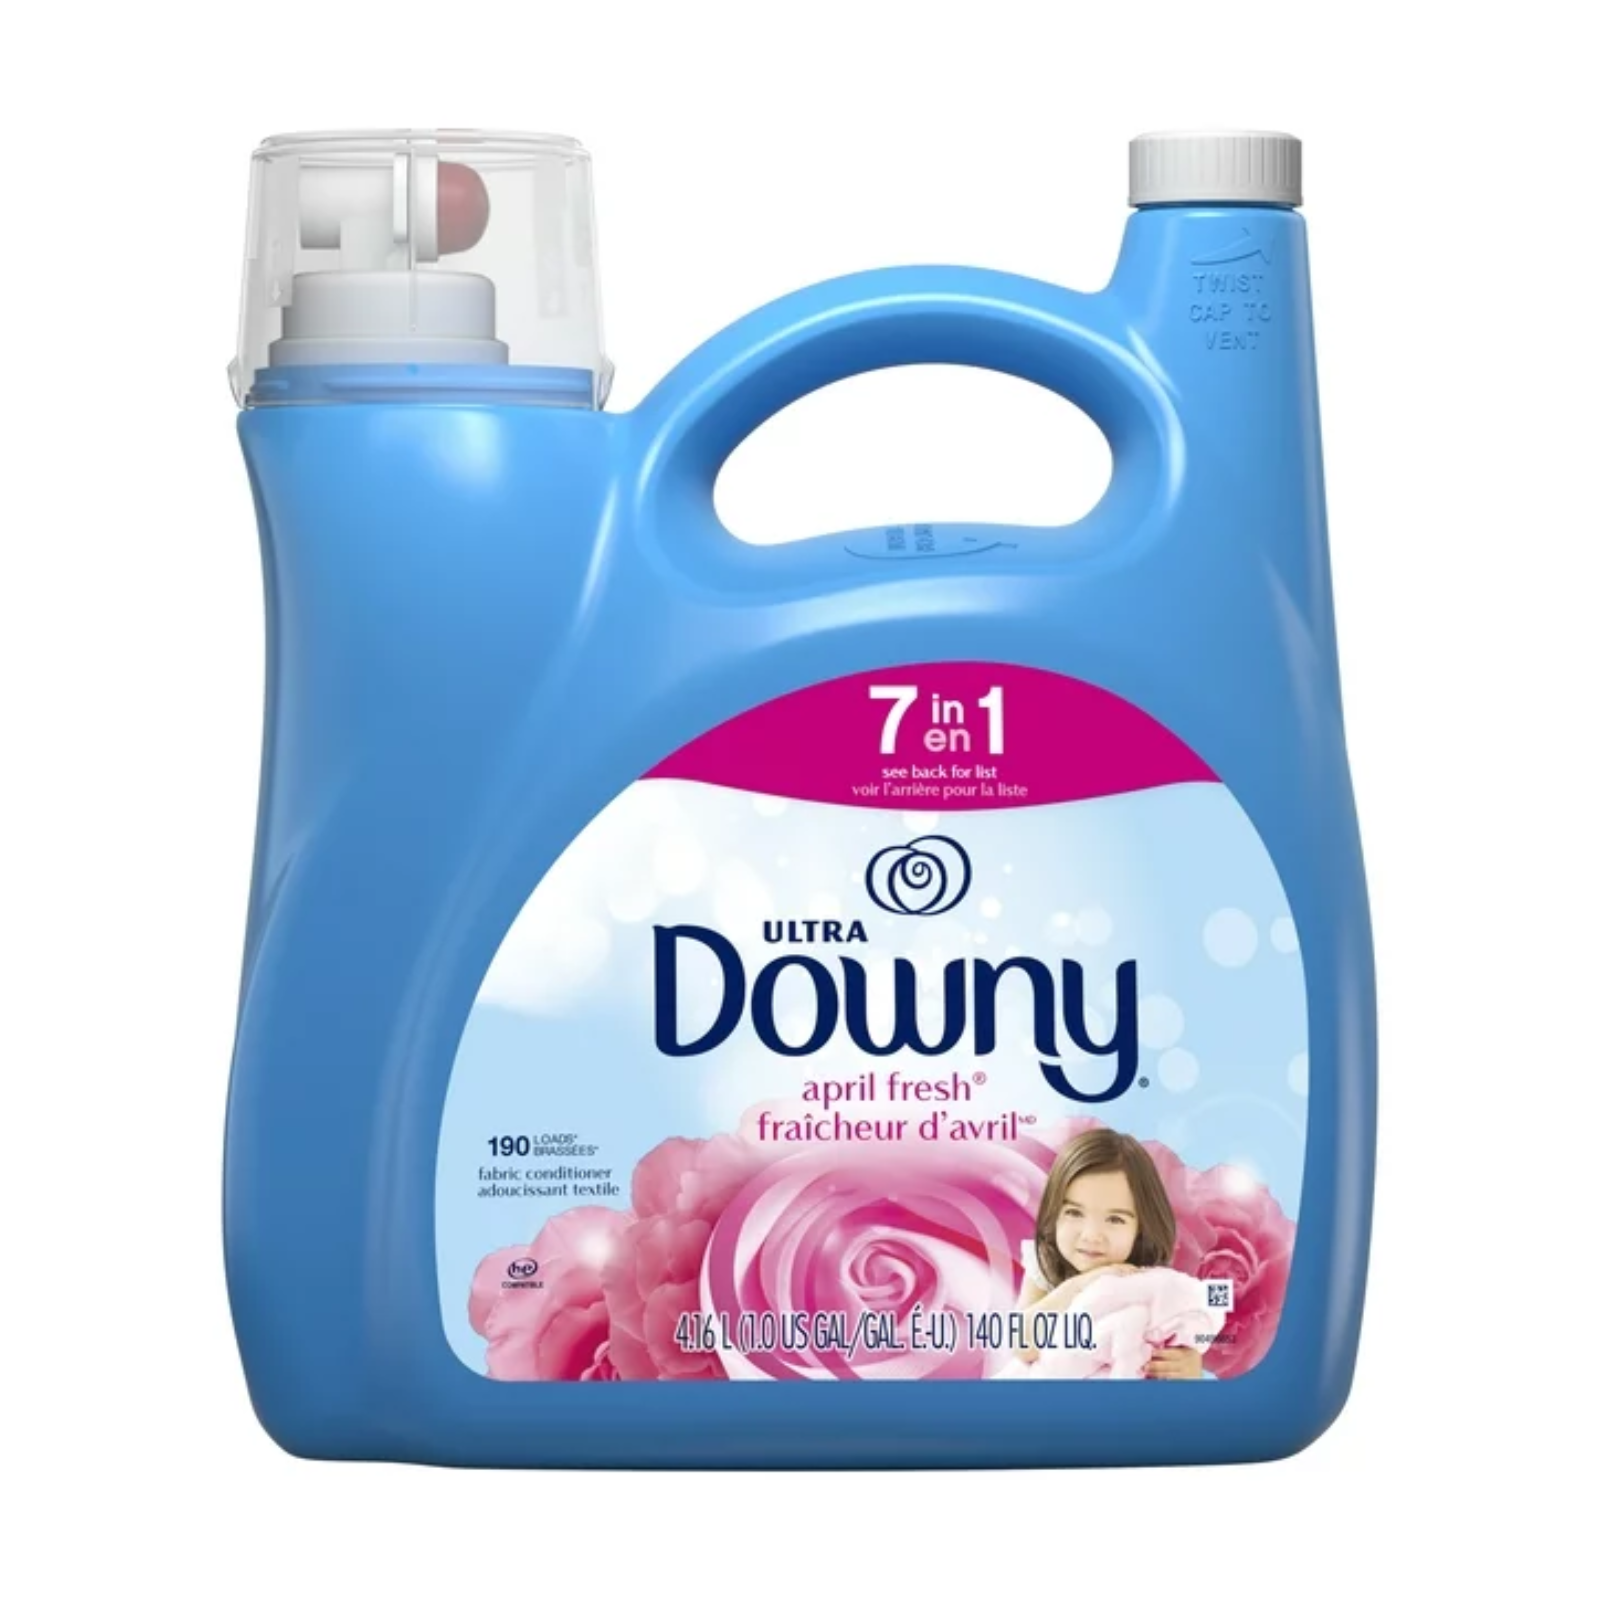 Downy - Ultra Laundry Liquid Fabric Softener (Fabric Conditioner), April Fresh, 140oz, 190 Loads - Case of 4